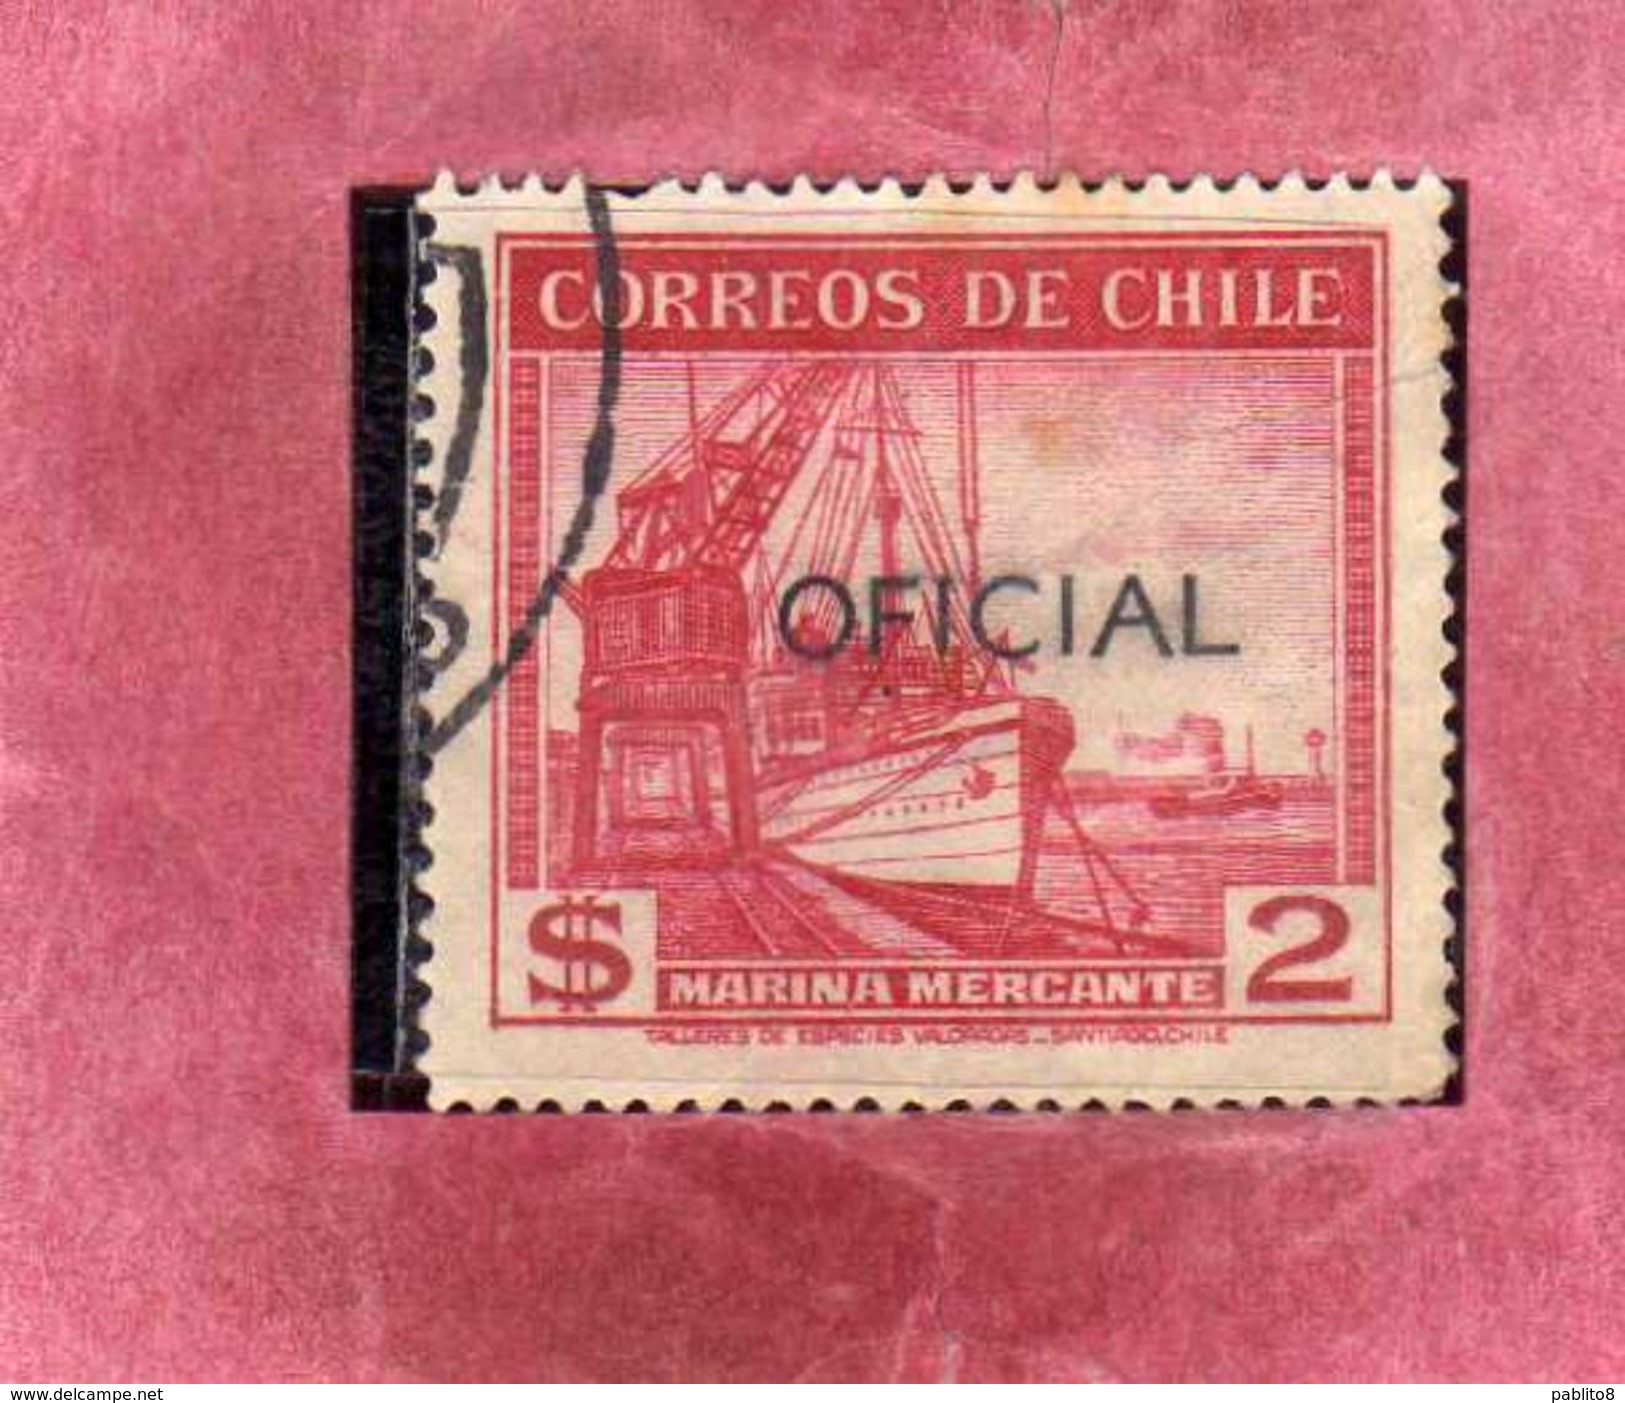 CILE CHILE 1940 1946 SERVICE MARINA MERCANTE MARINE MERCANTILE OFICIAL OVERPRINTED (1938) PESOS 2p USATO USED OBLITERE - Cile